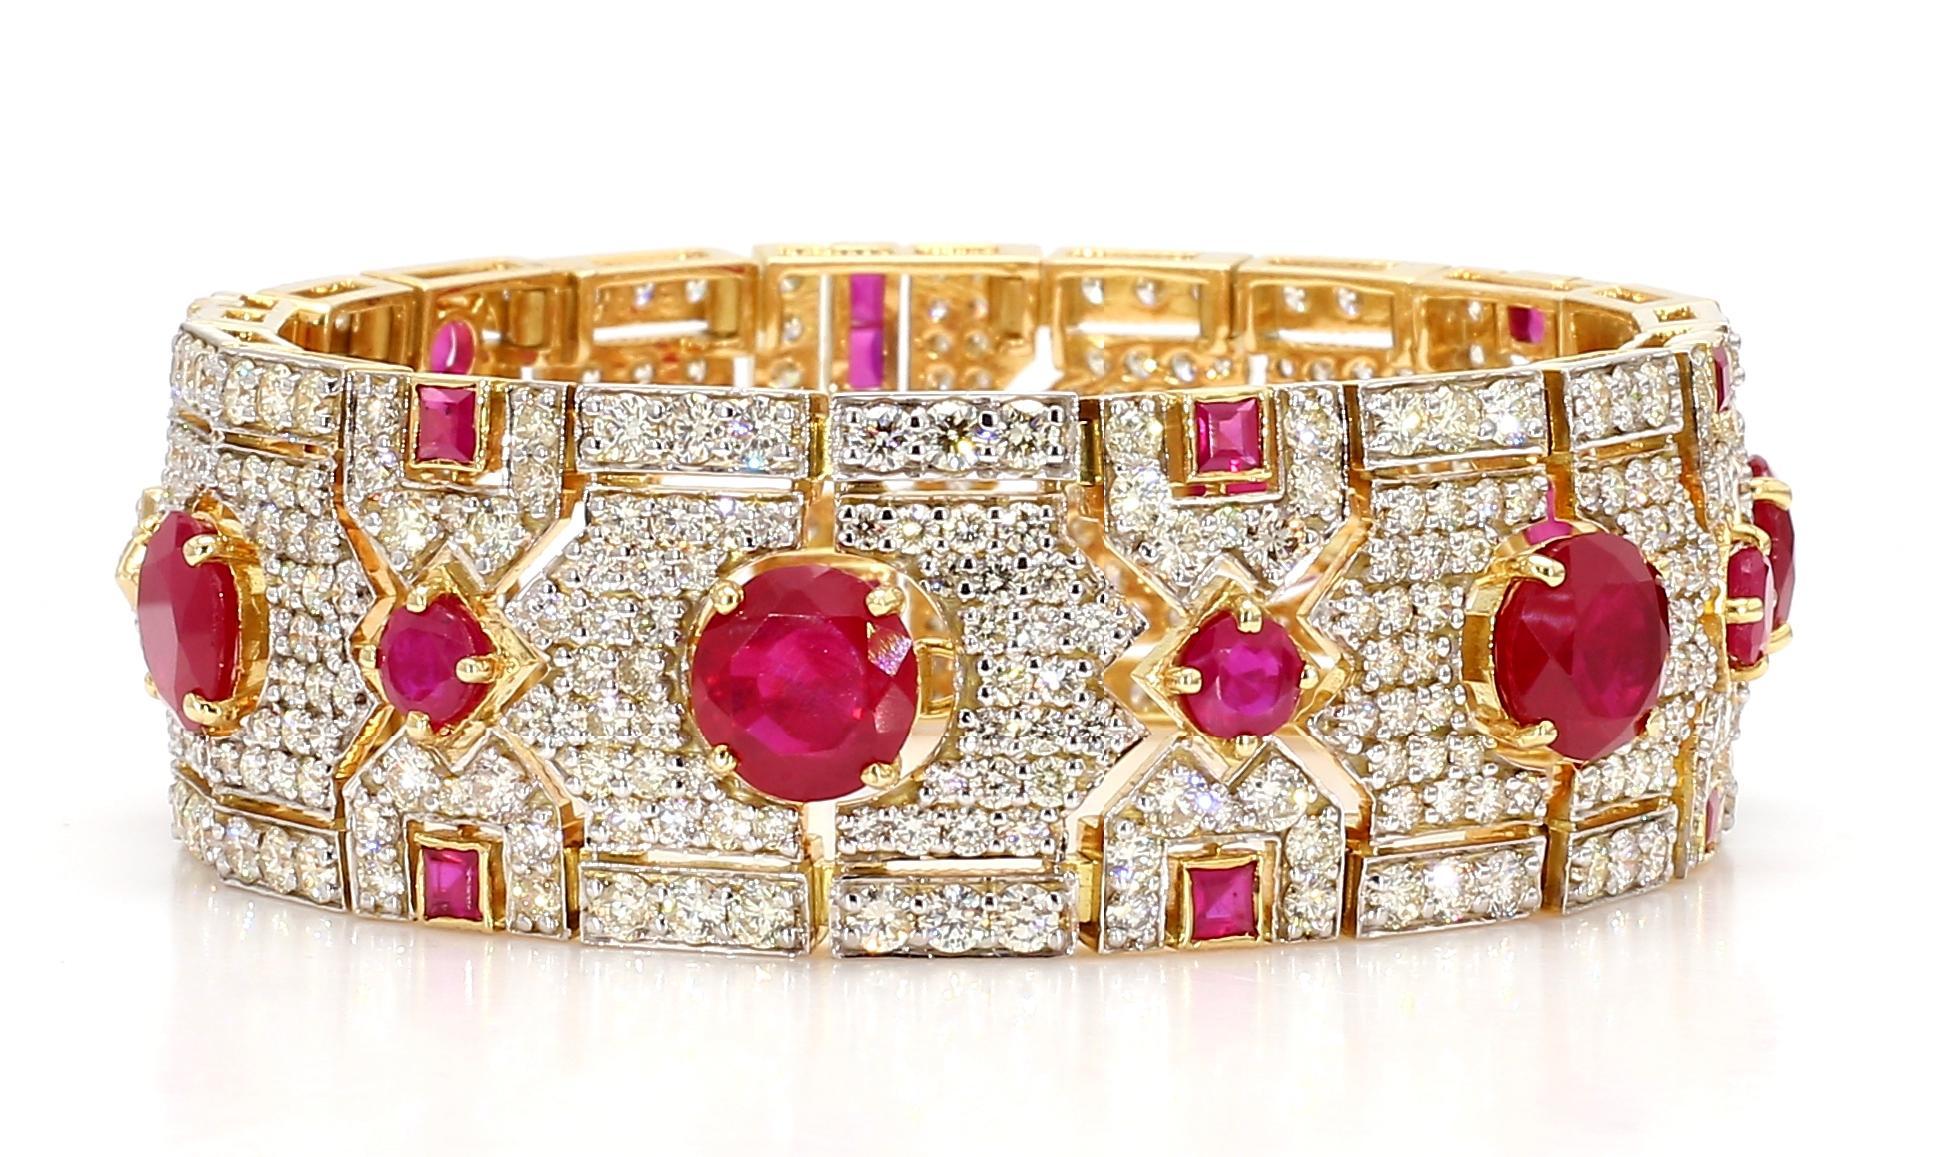 13.25 Carat Diamond 16.59 Carat Ruby Bracelet 18K White Gold For Sale 1